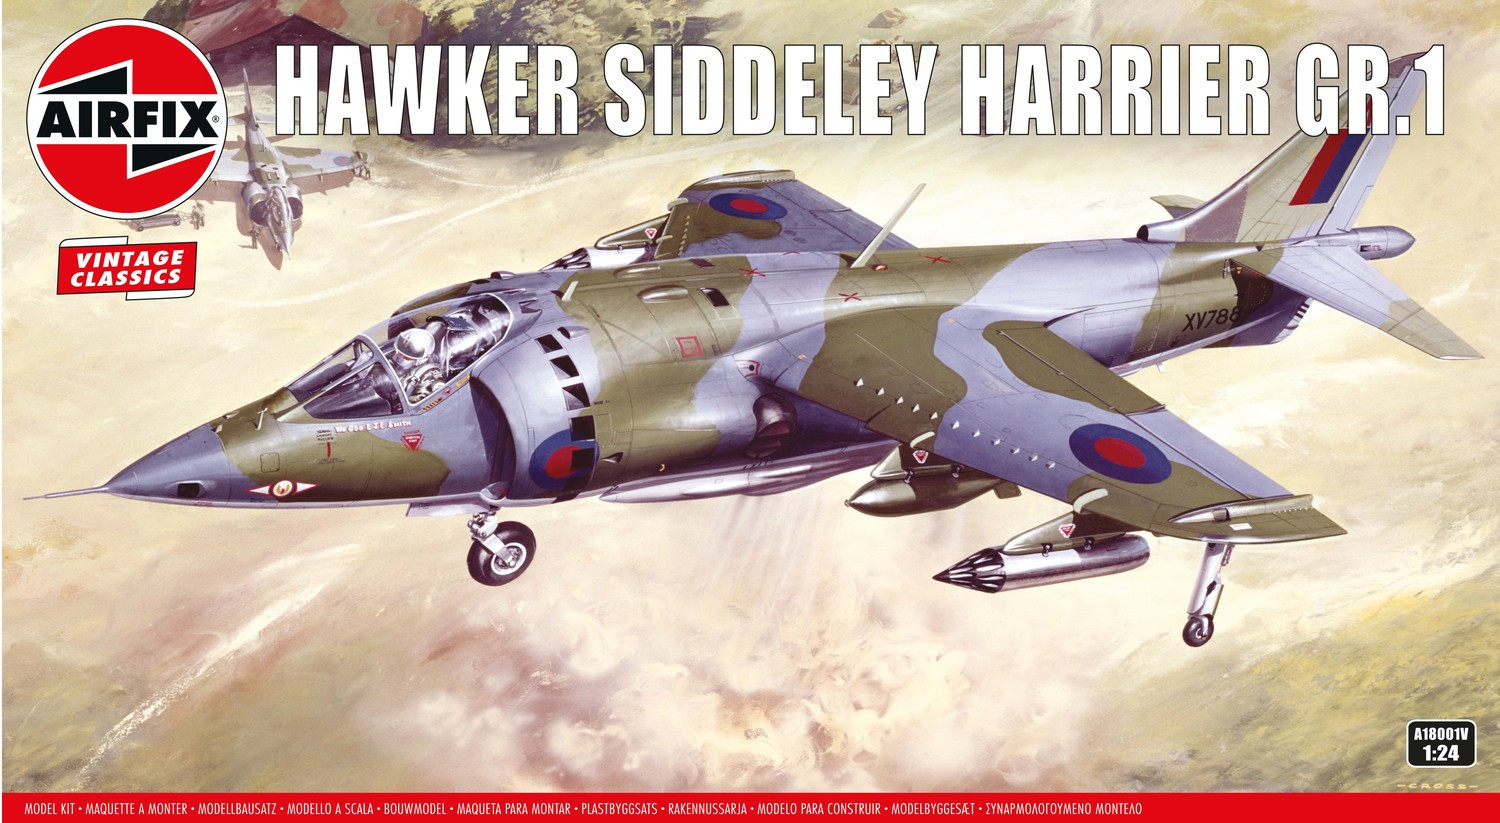 British Hawker Siddeley Harrier GR.1 (1:24 Scale)